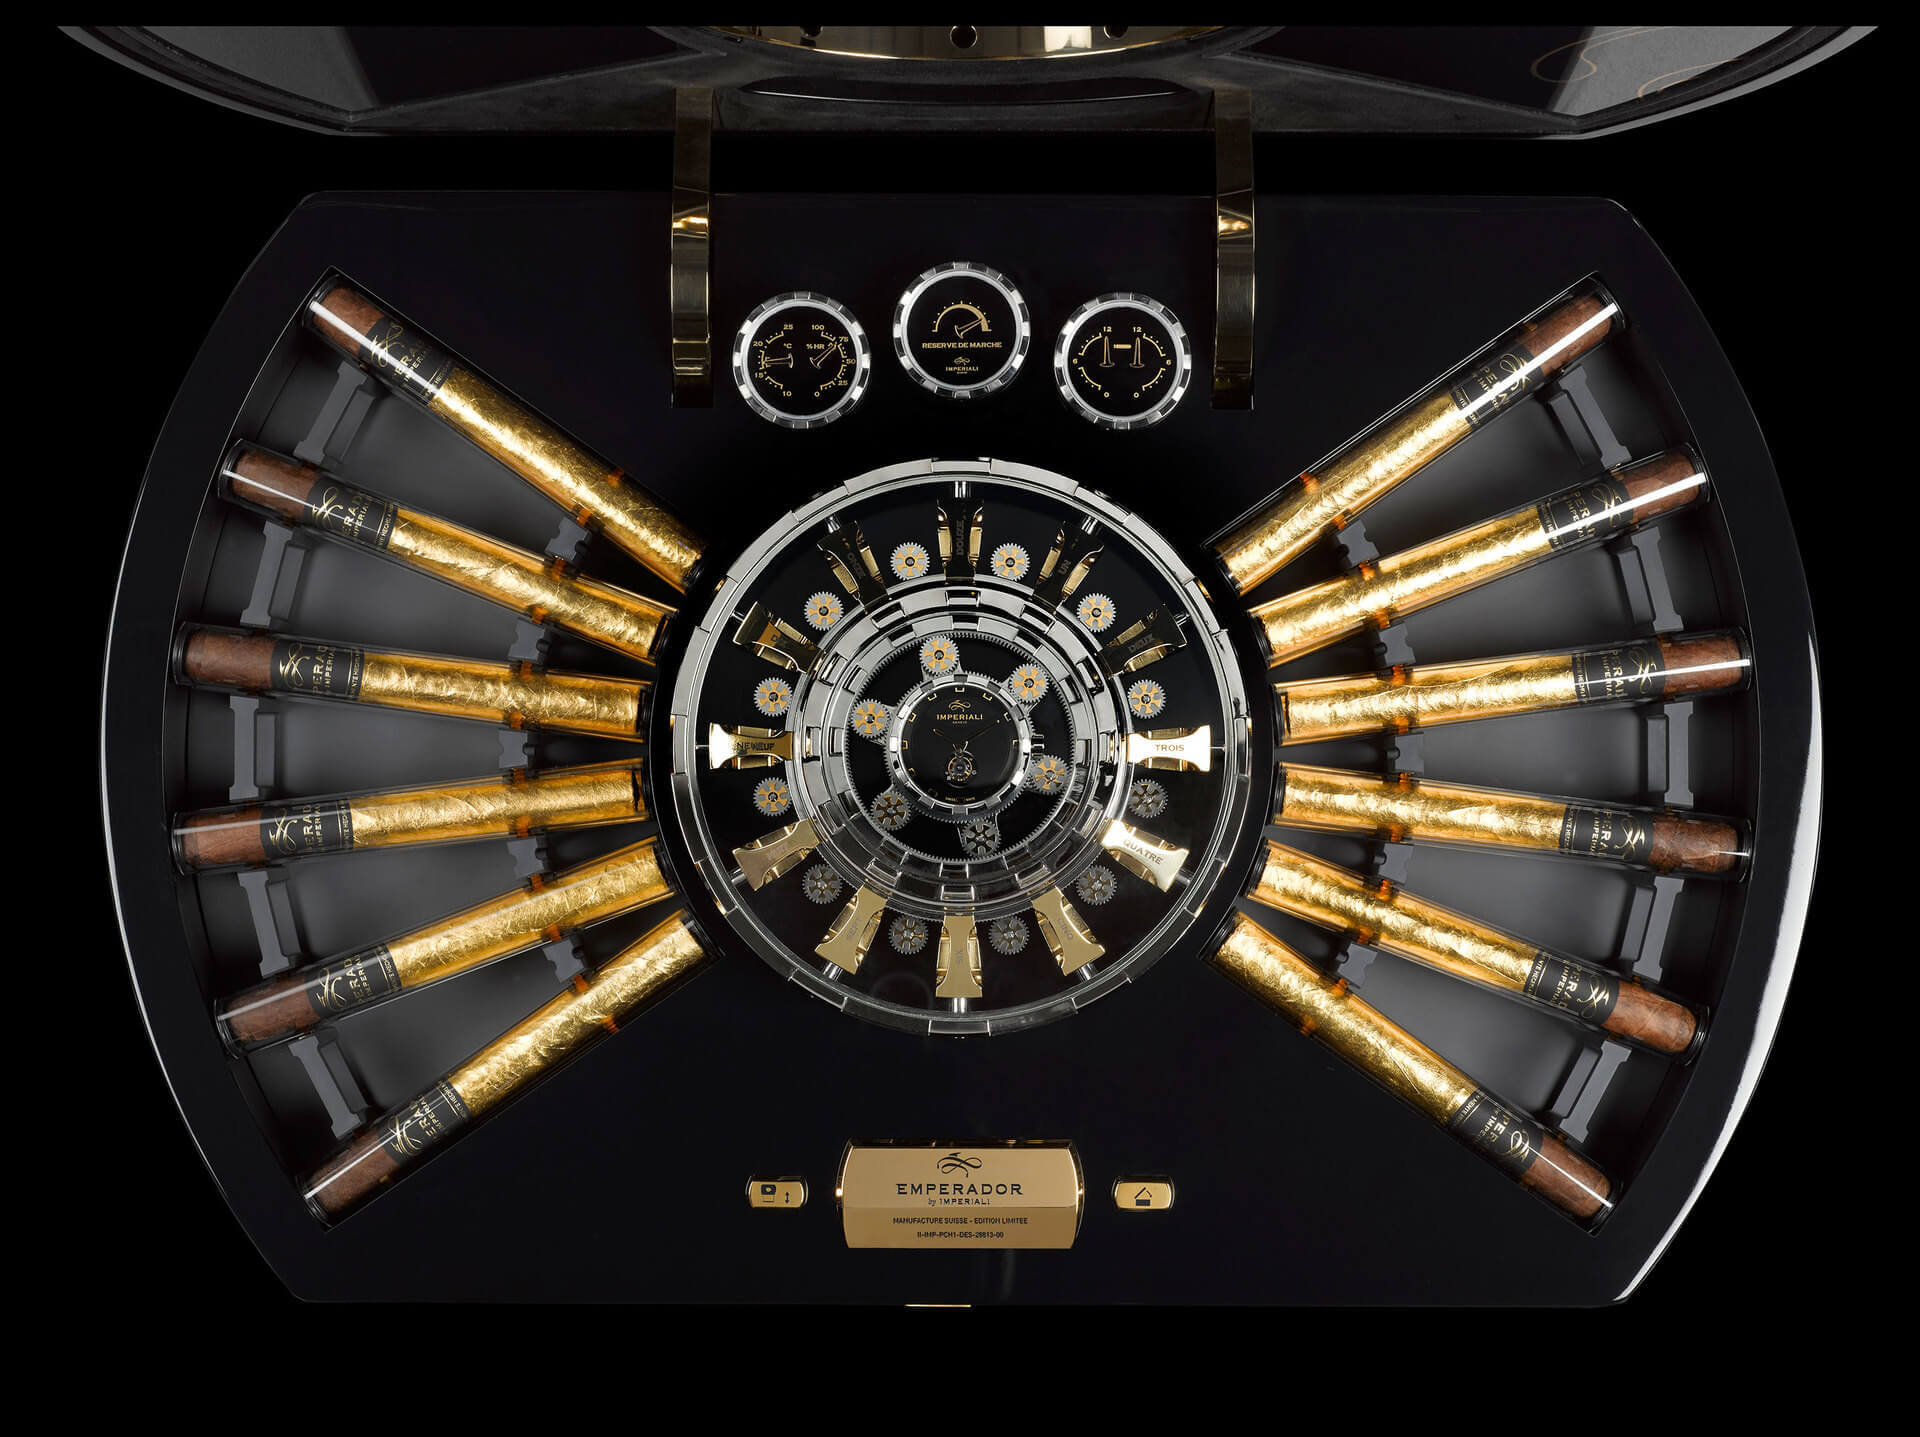 imperiali-geneve-emperador-cigares-cave-coupe-laser-tourbillon-luxe-design-horlogerie-effronté-07